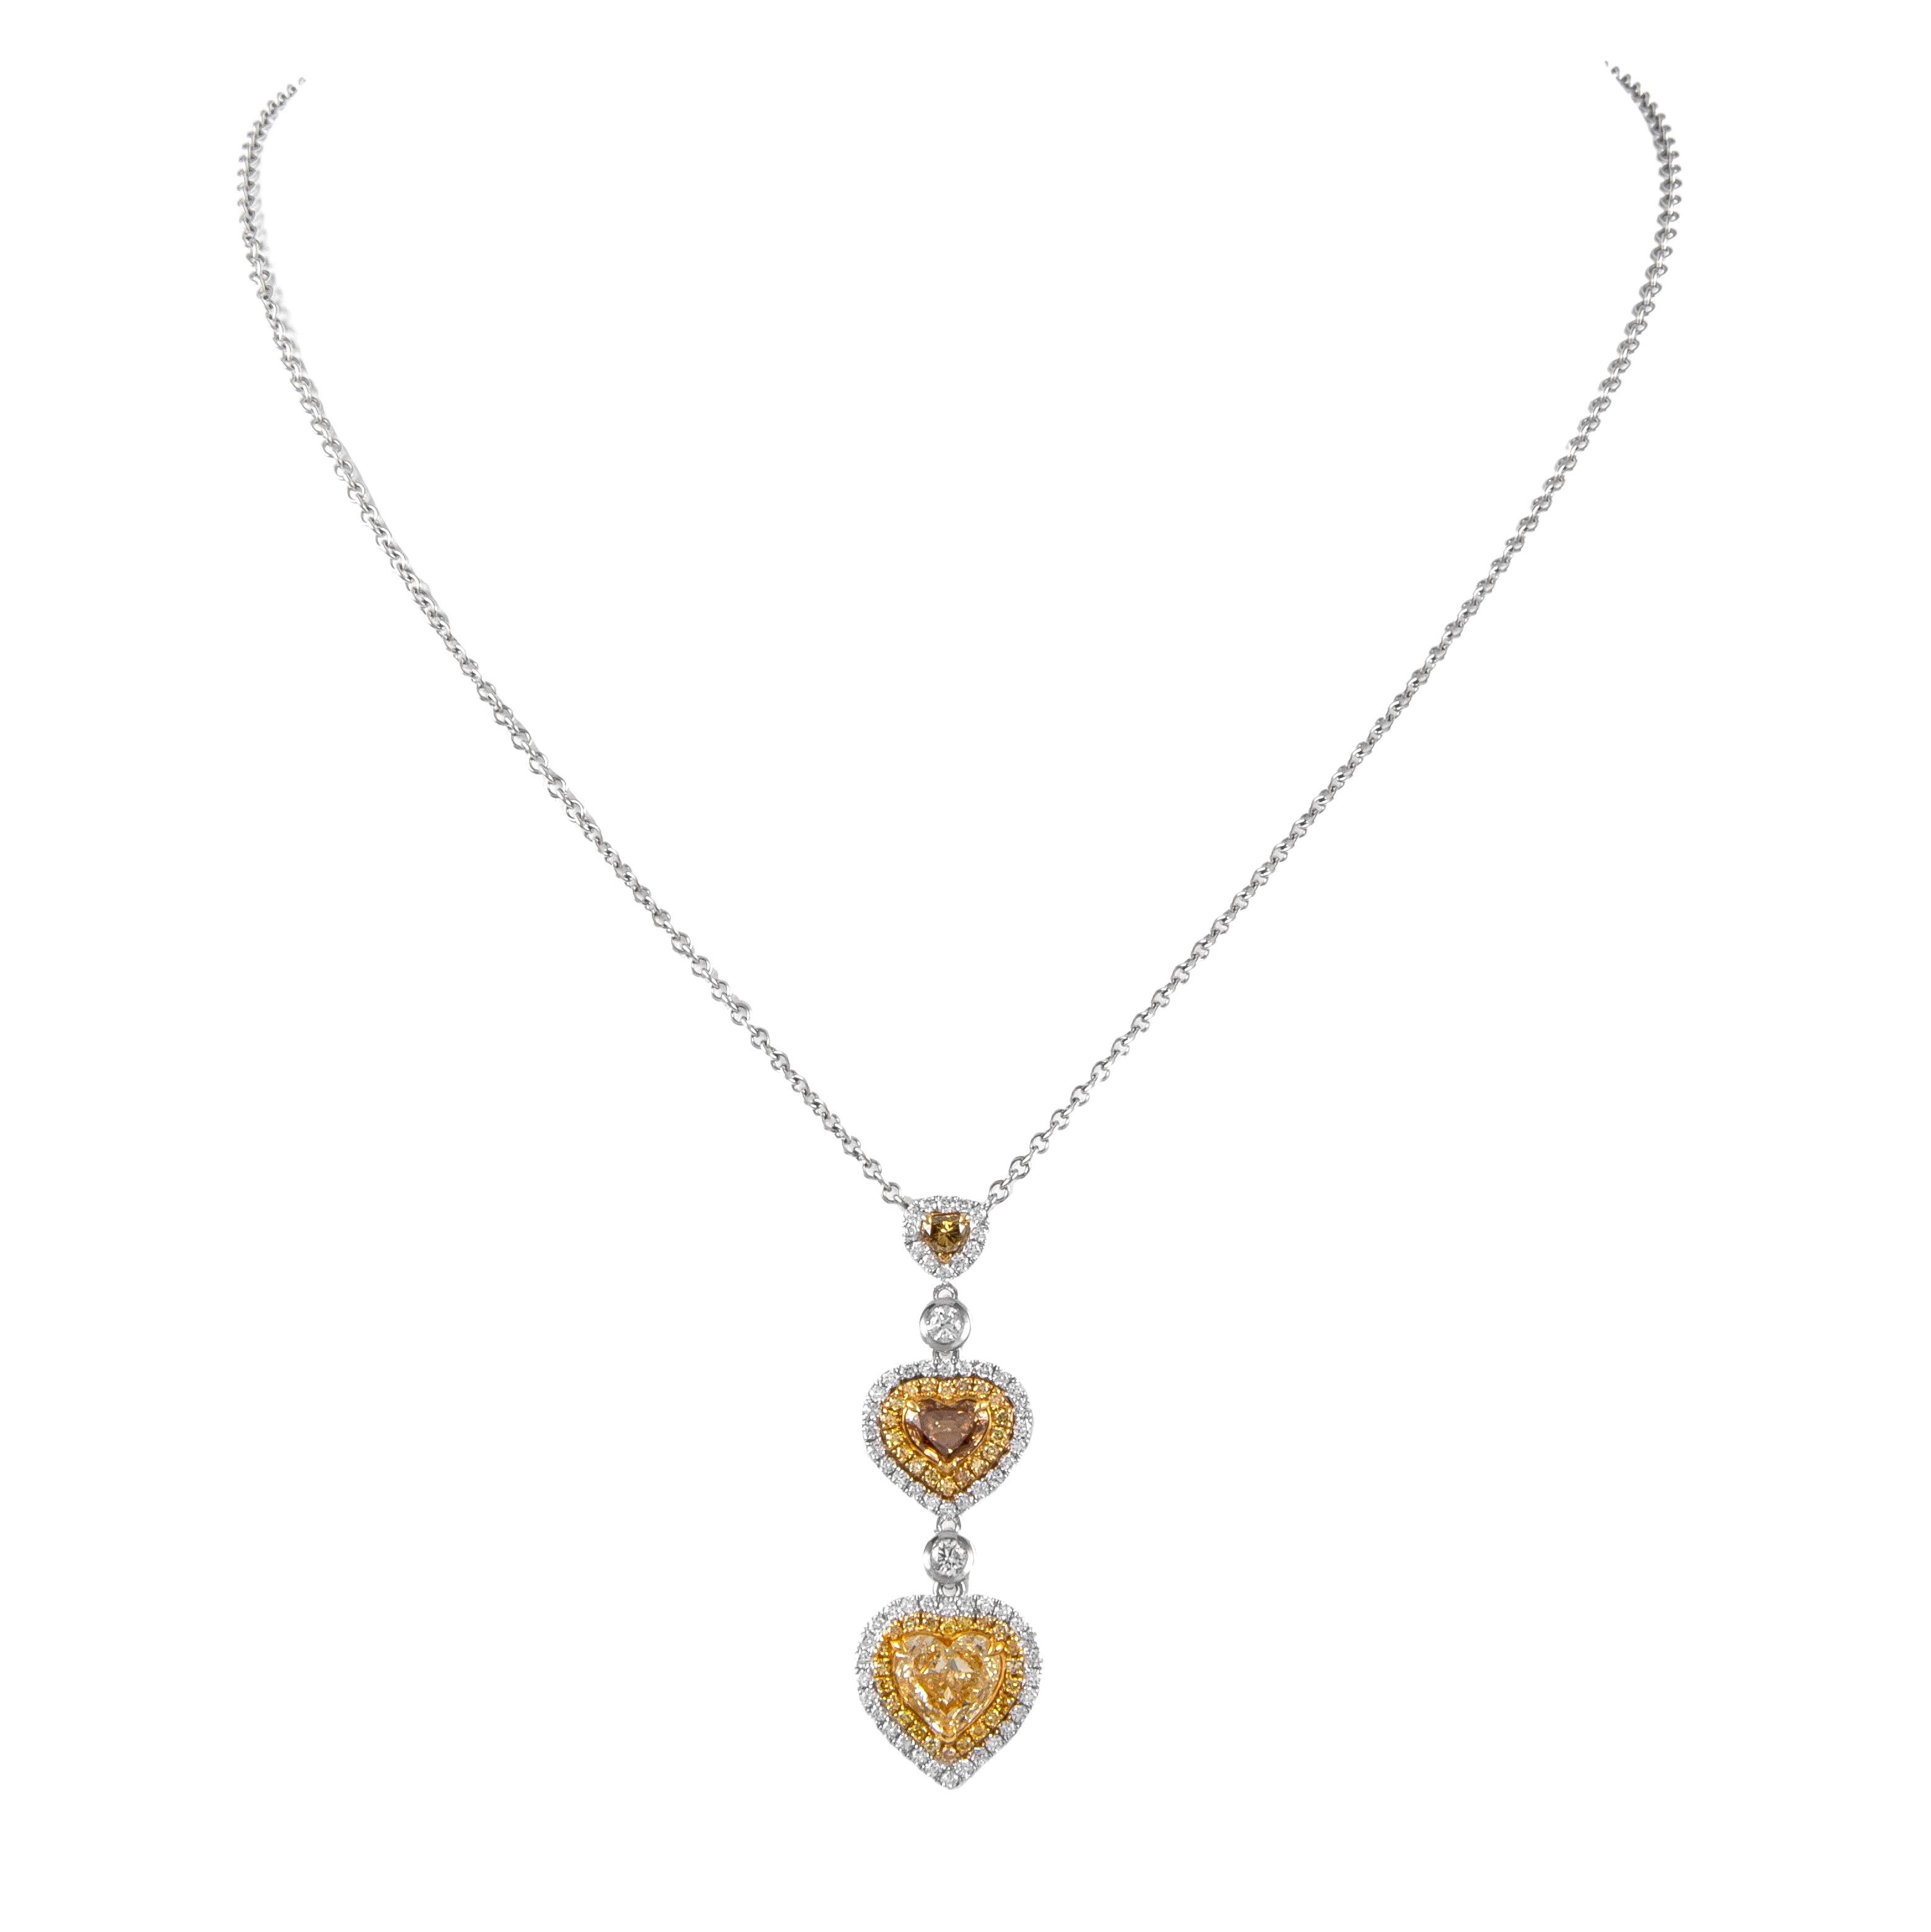 Contemporary Alexander 3.54ctt Fancy Color Diamond Drop Necklace 18k White & Yellow Gold For Sale